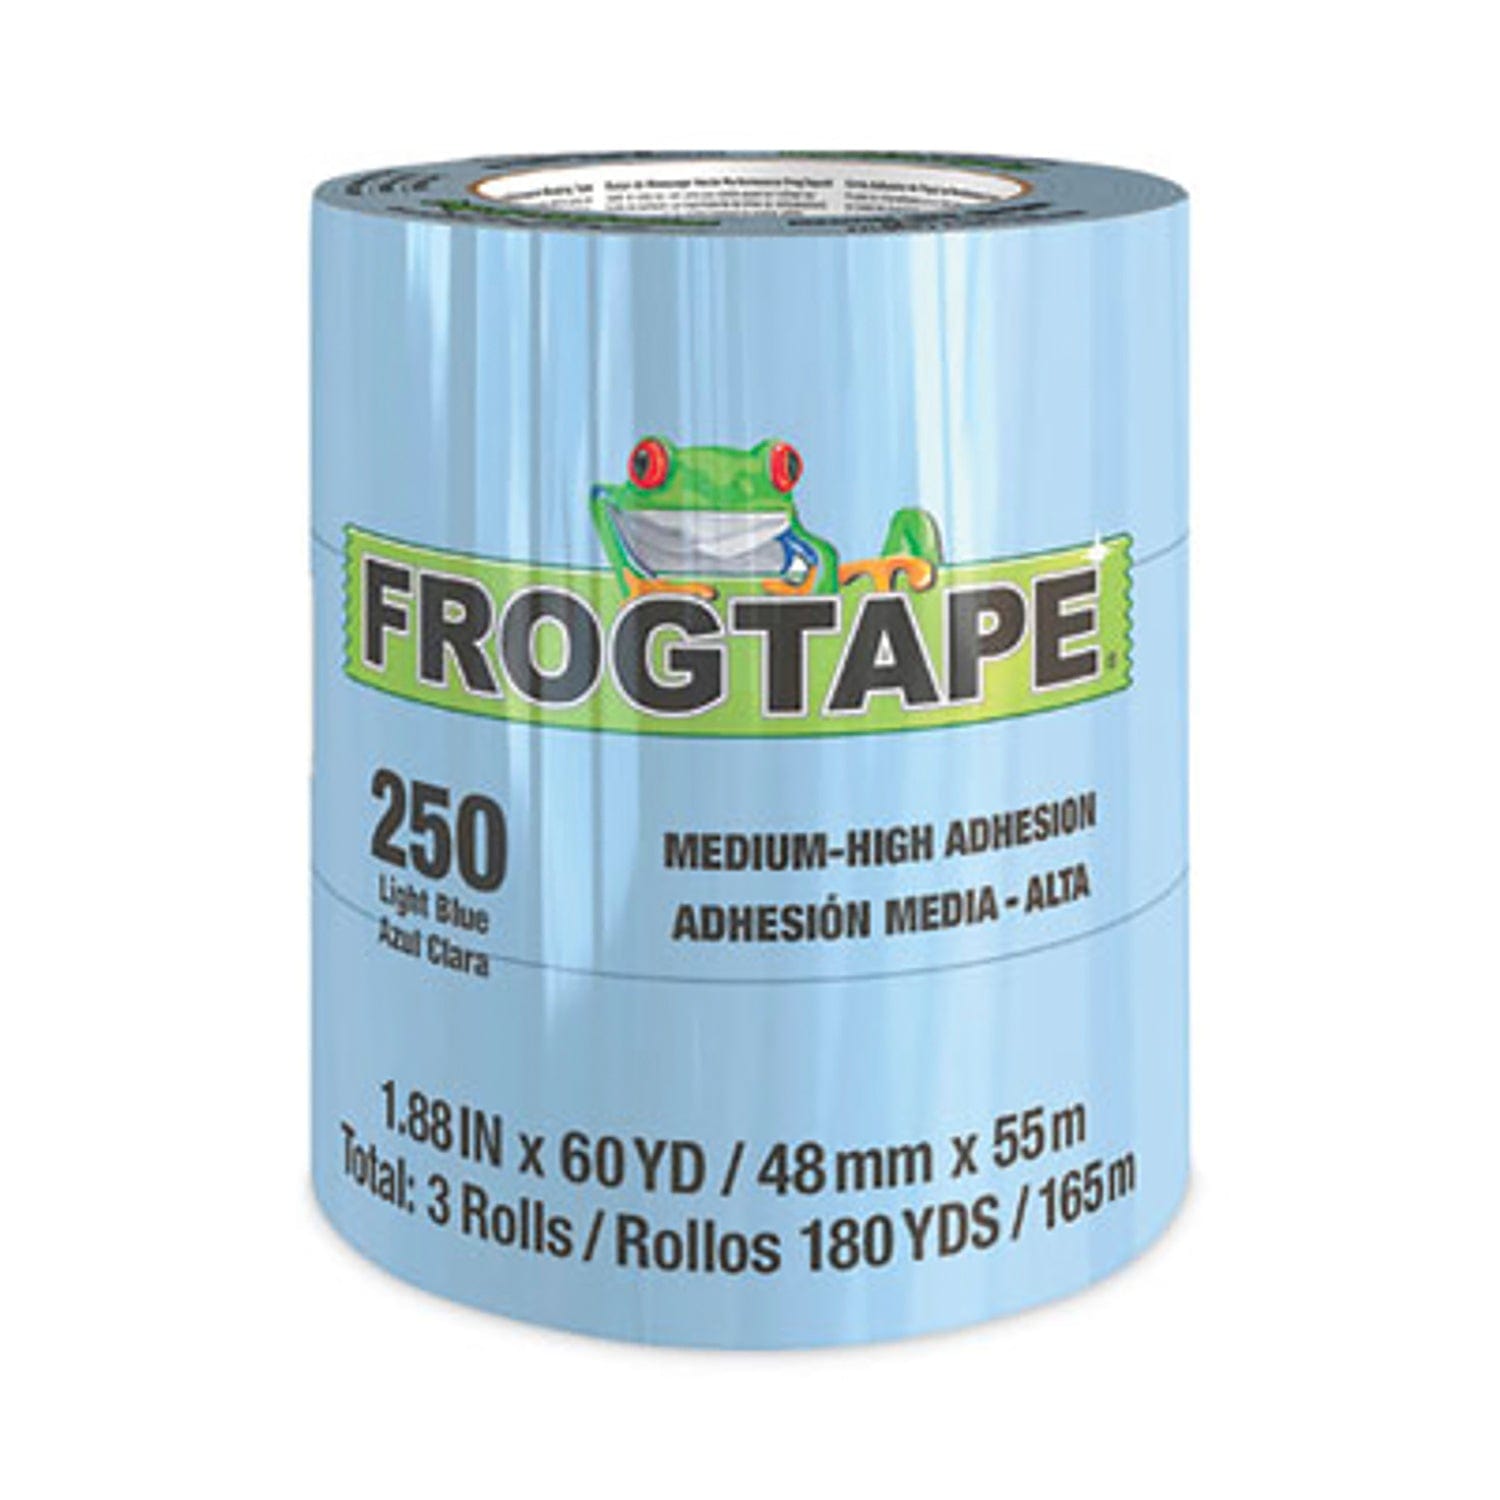 Shurtape 105329 FrogTape CP 250 48mmx55m Performance Grade Masking Tape, Medium-High Adhesion, Moderate Temperature - Light Blue